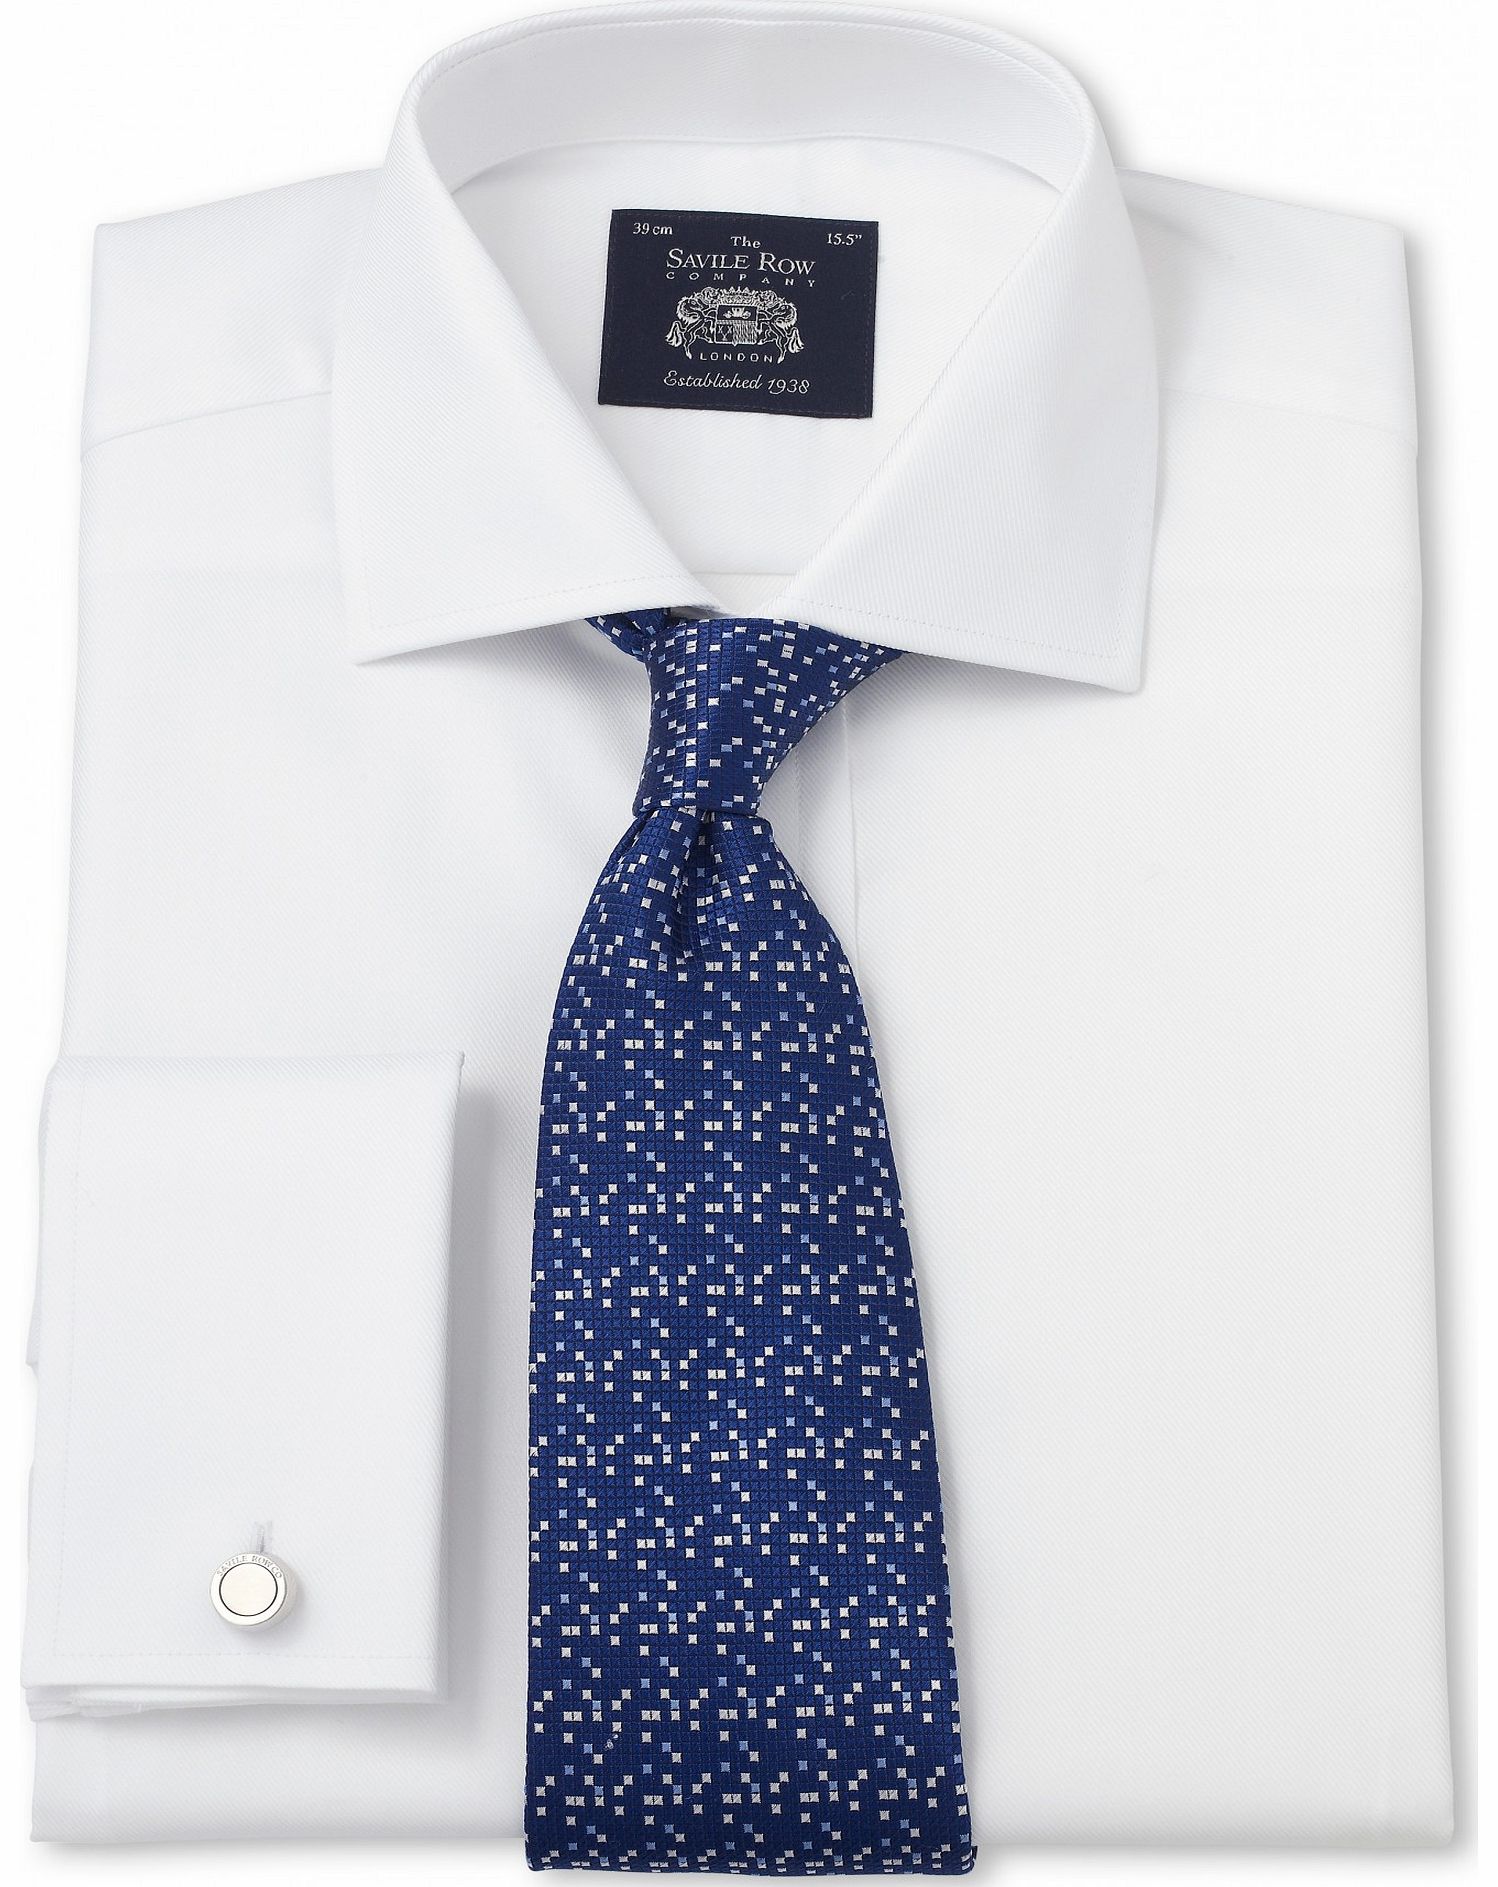 Savile Row Company White Twill Slim Fit Shirt 16`` Lengthened Single